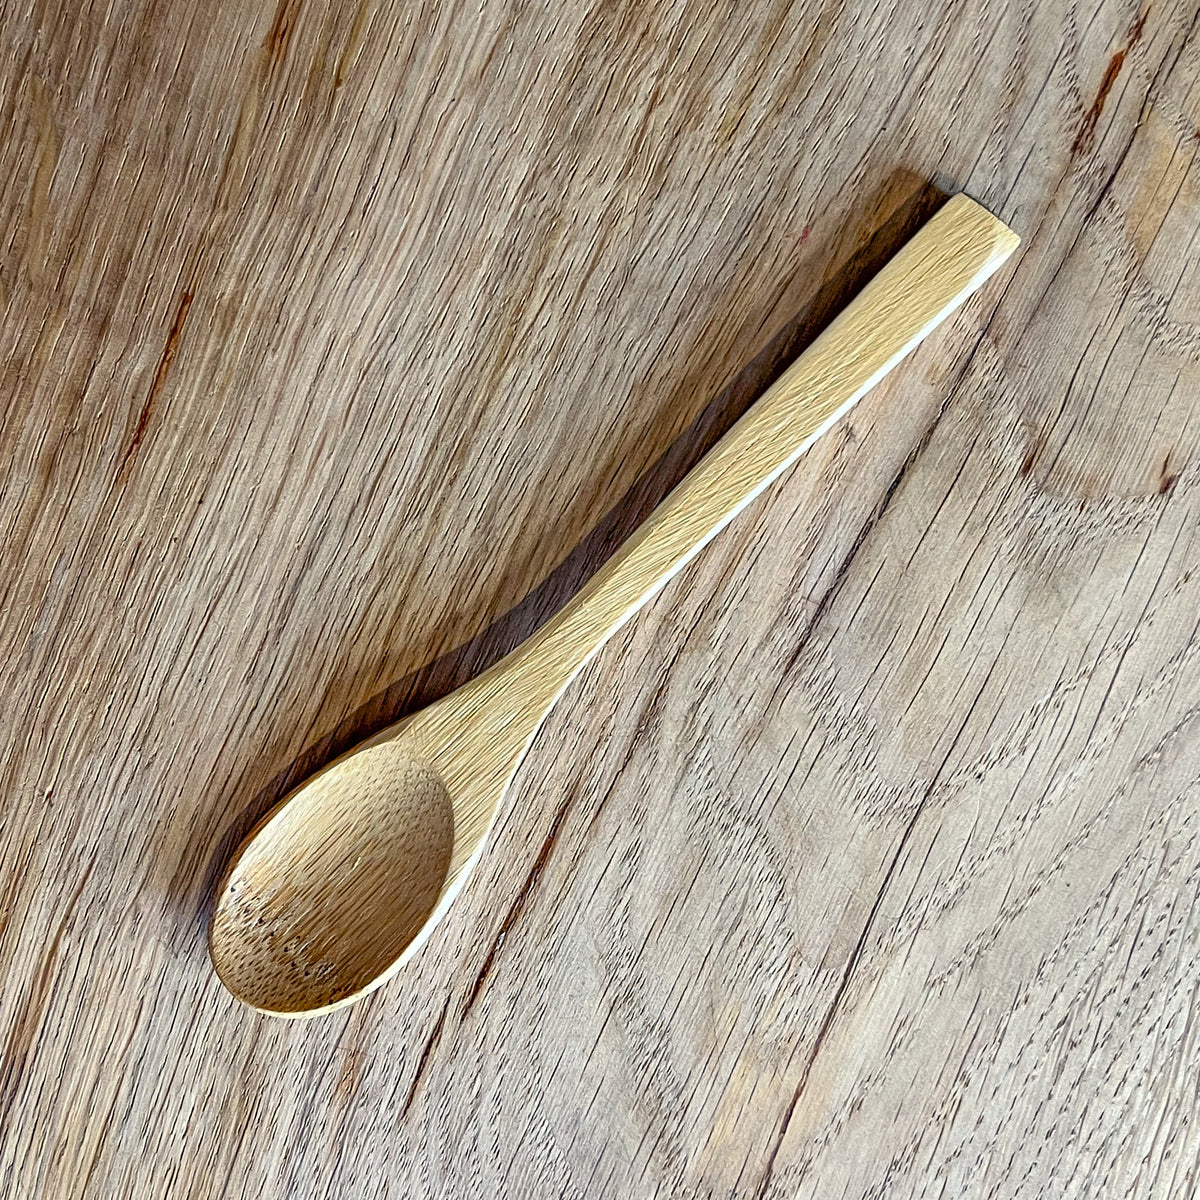 Chawanmushi Spoon, Wood